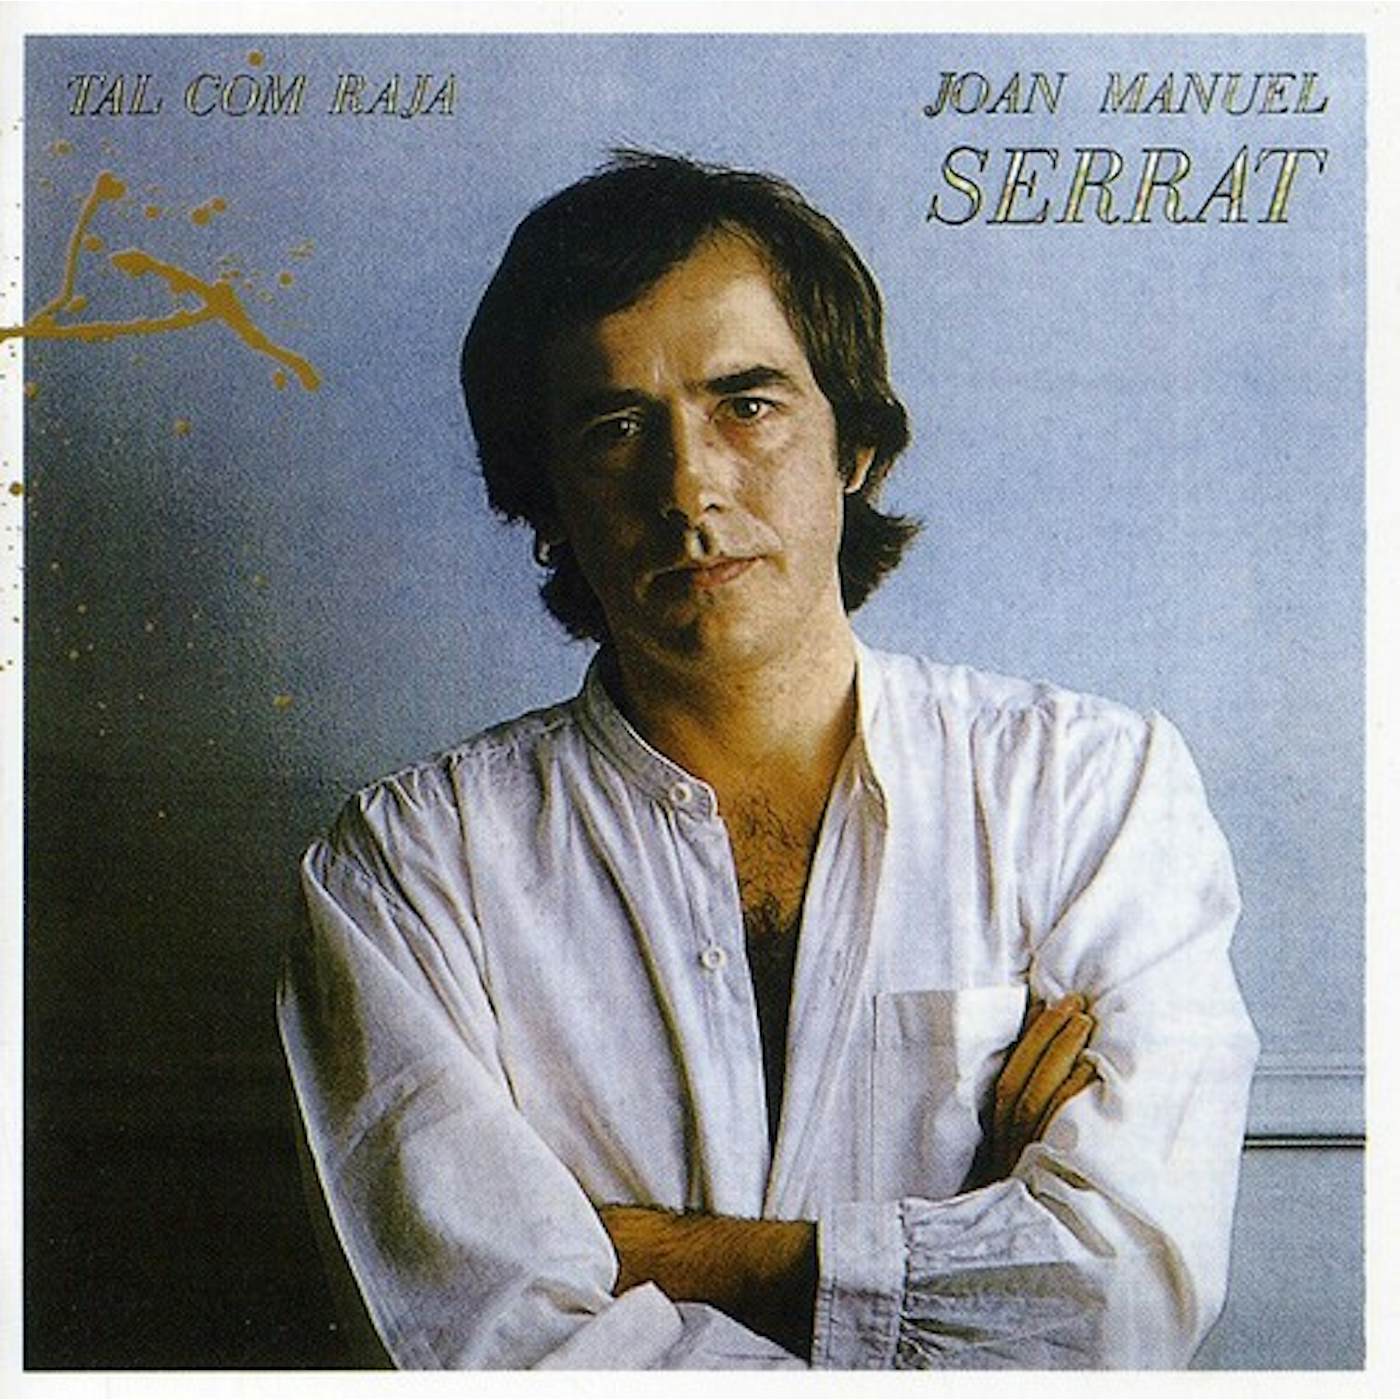 Joan Manuel Serrat TAL COM RAJA CD